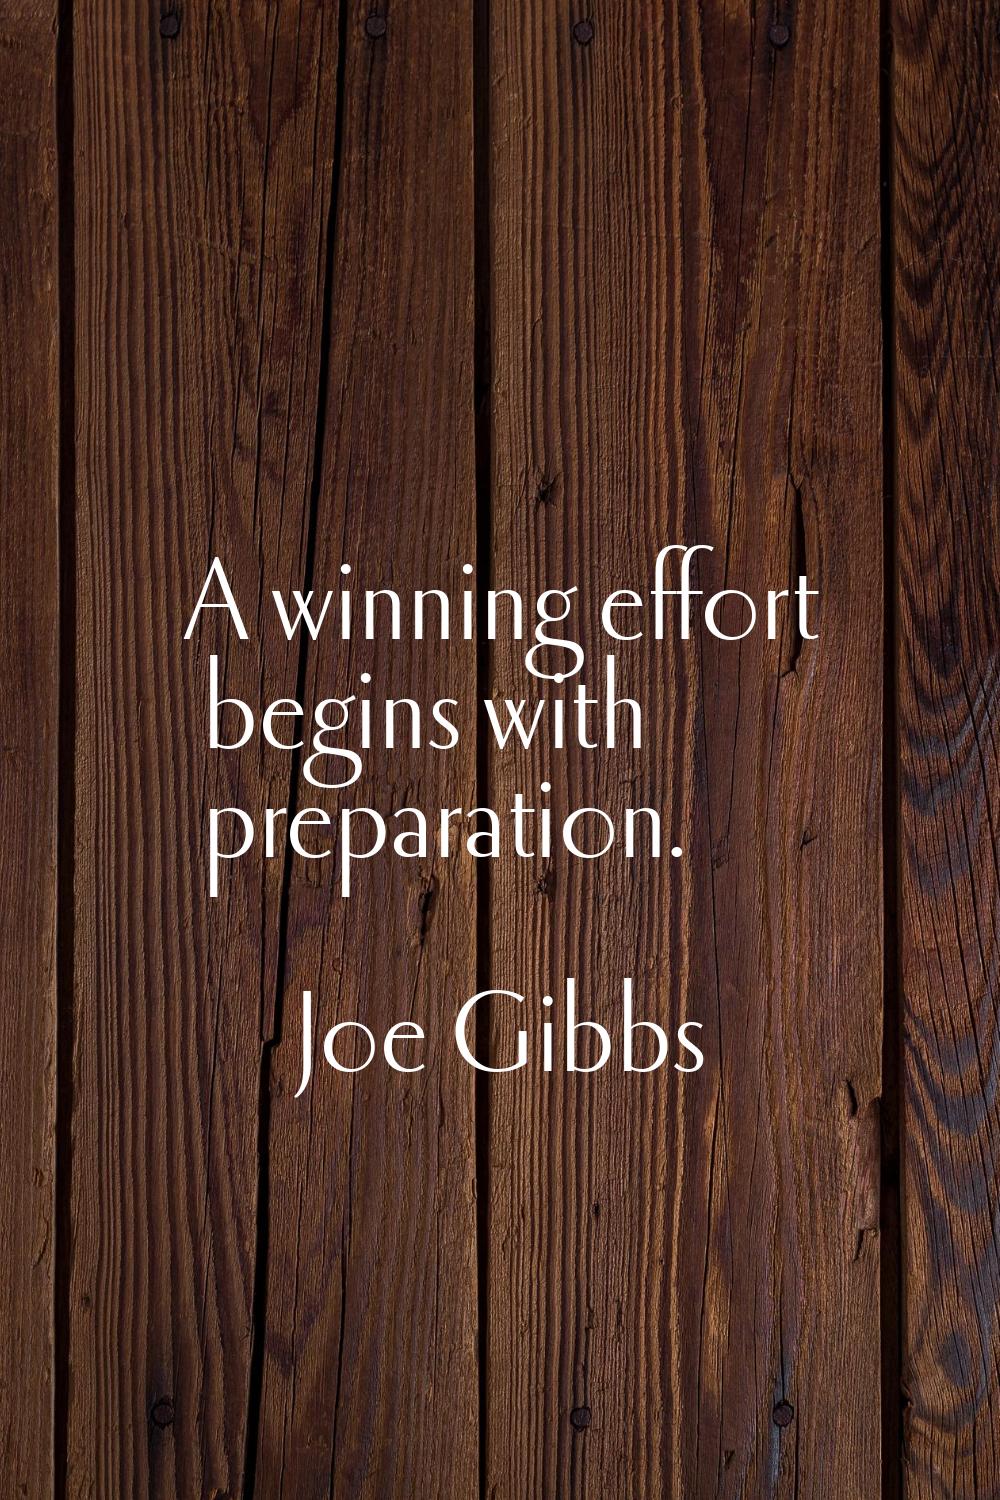 A winning effort begins with preparation.